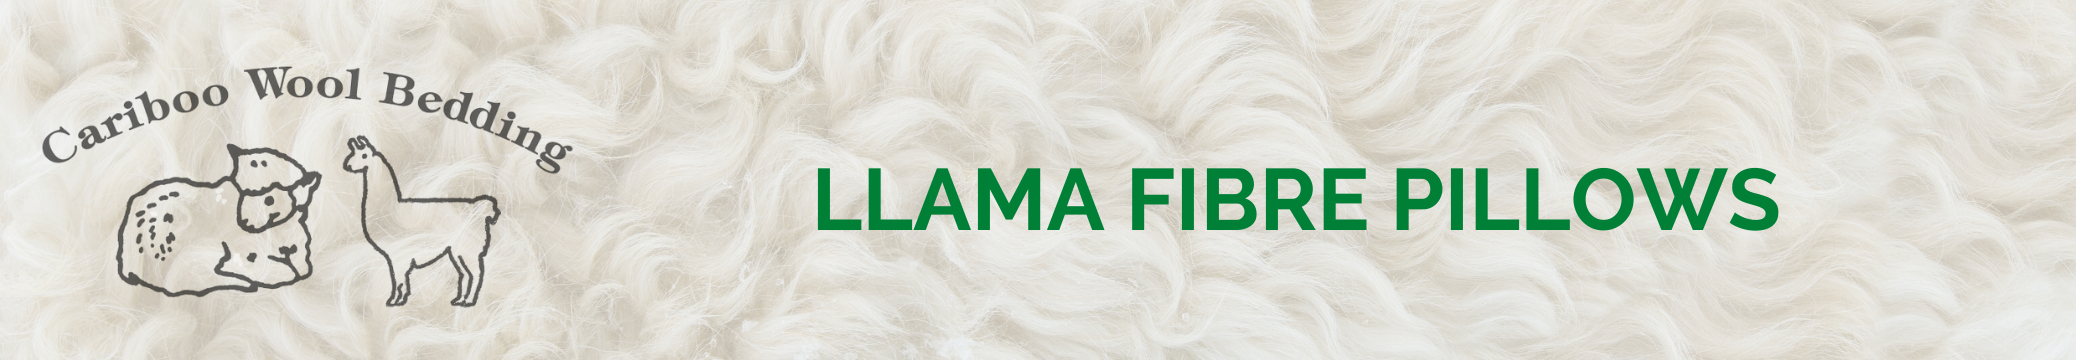 Llama Fibre Pillows Store